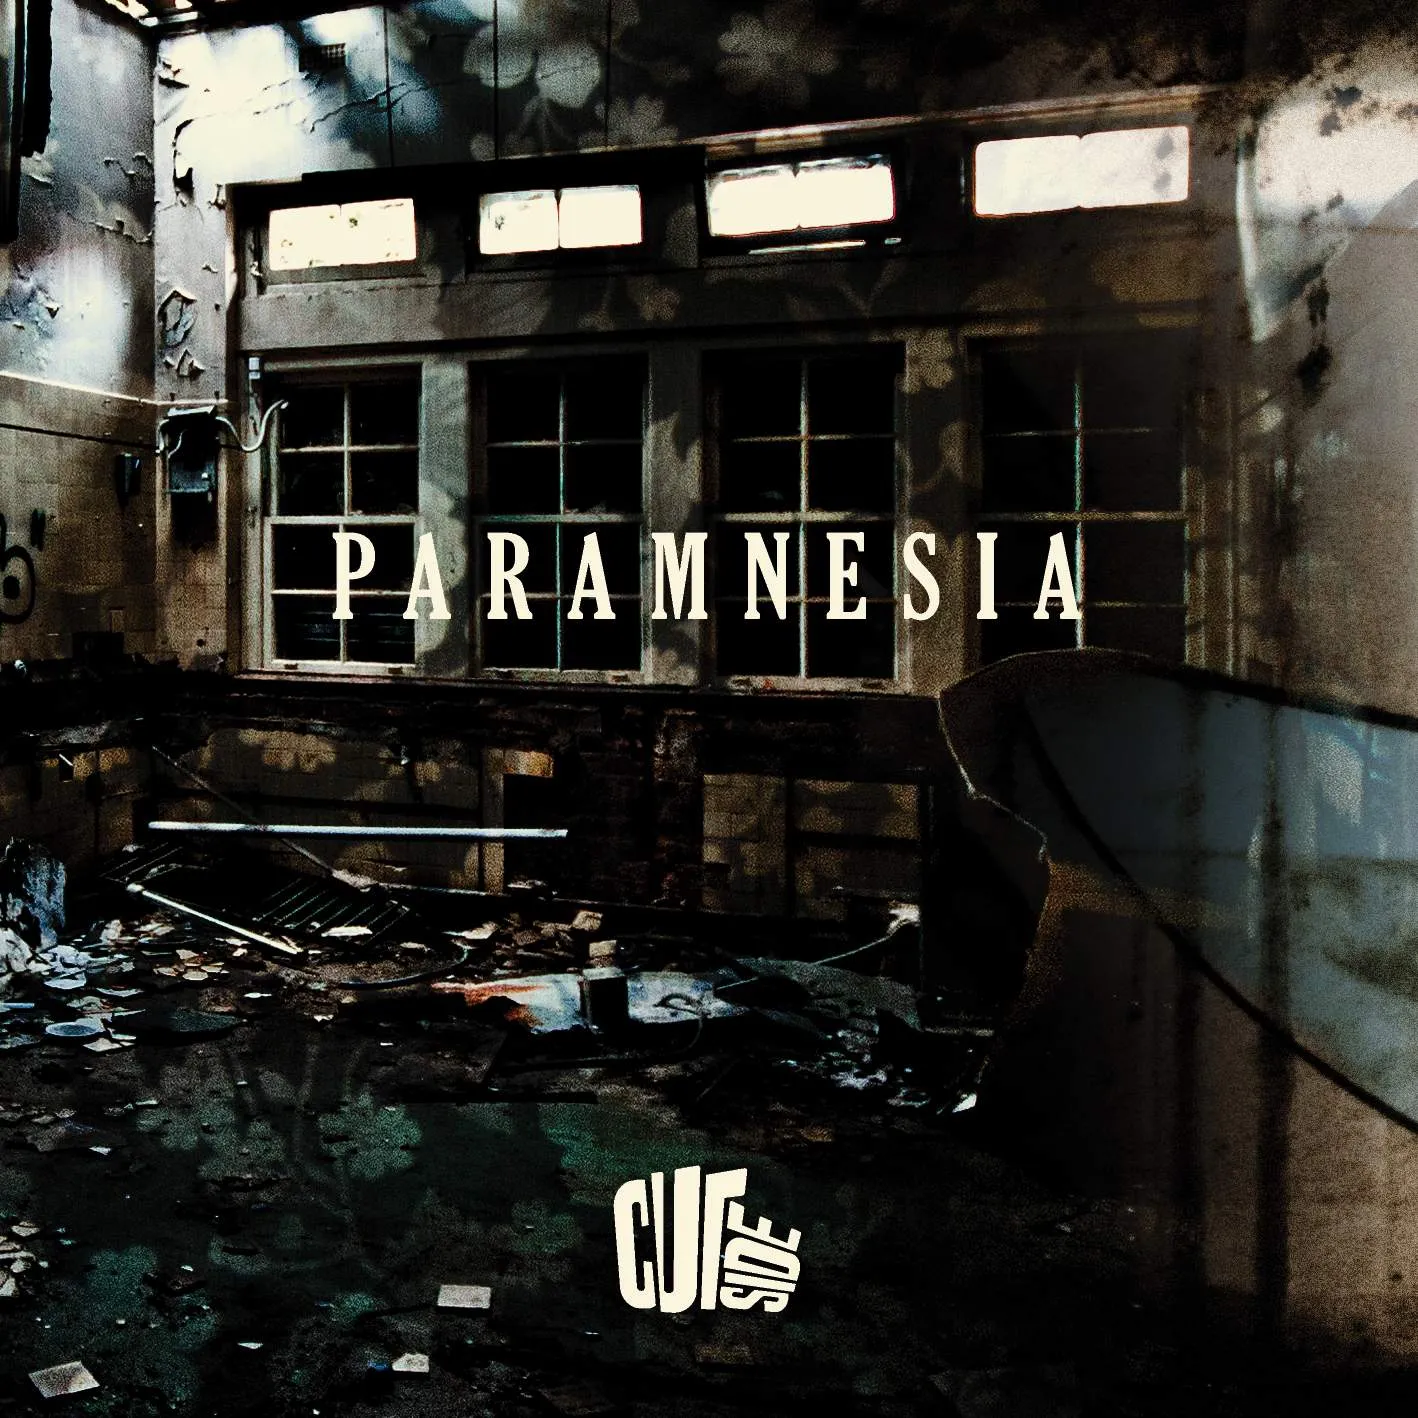 Album cover for “Paramnesia” by Cutside